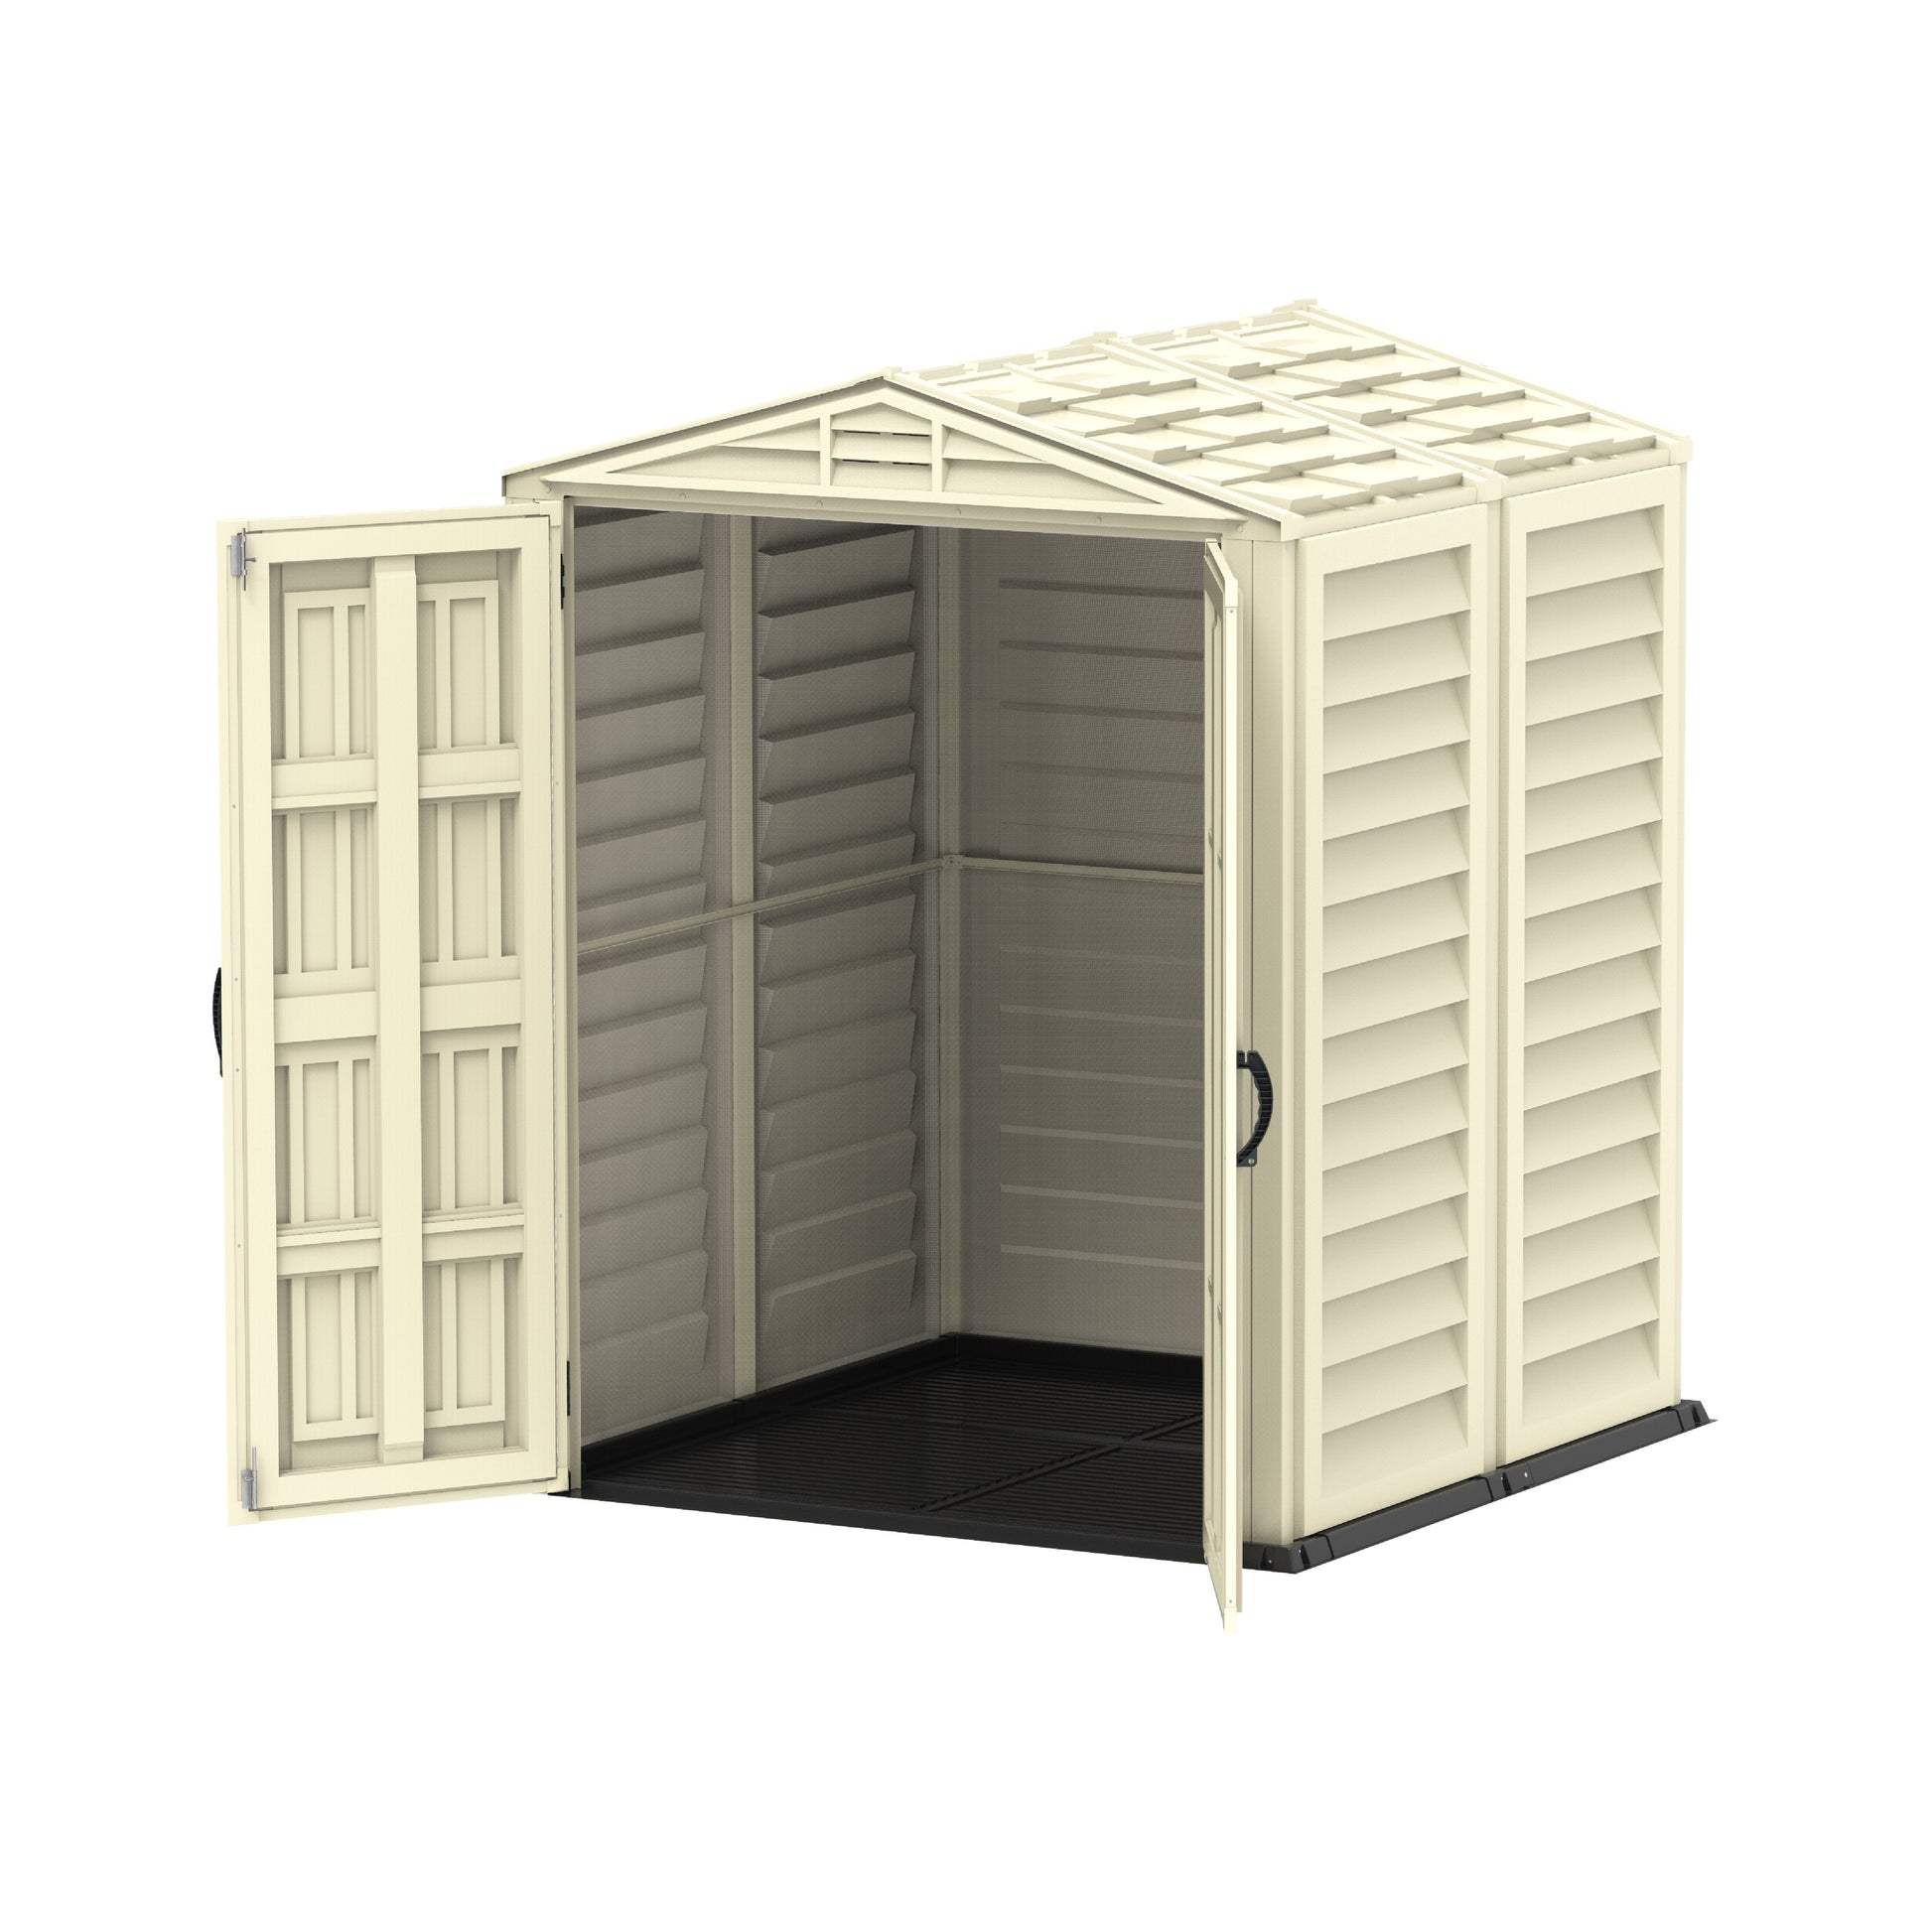 Walk-in Garden & Outdoor Storage Shed 5x5ft- Cosmoplast KSA